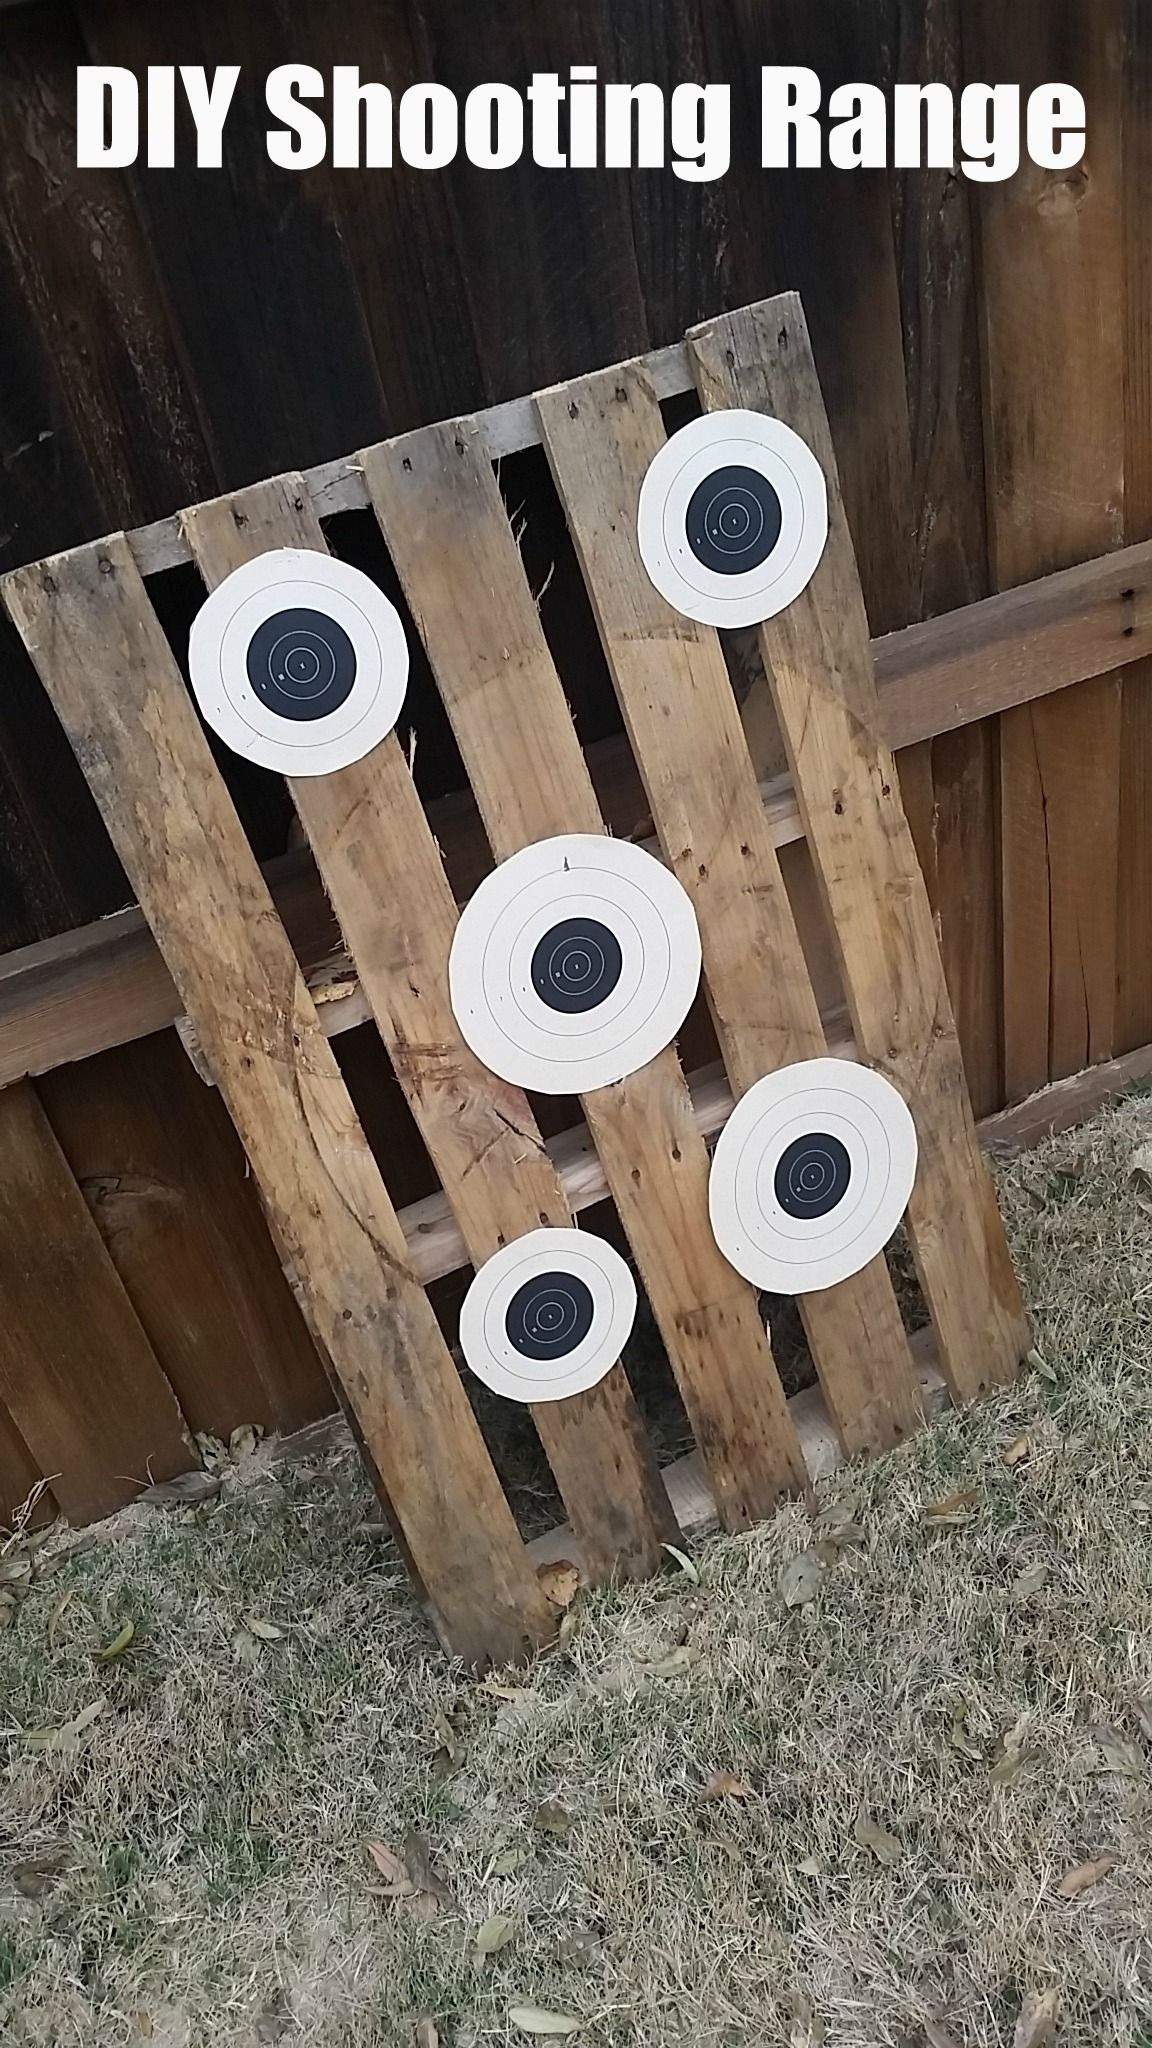 DIY Outdoor Shooting Range
 Every Day Fun with Daisy BB Guns